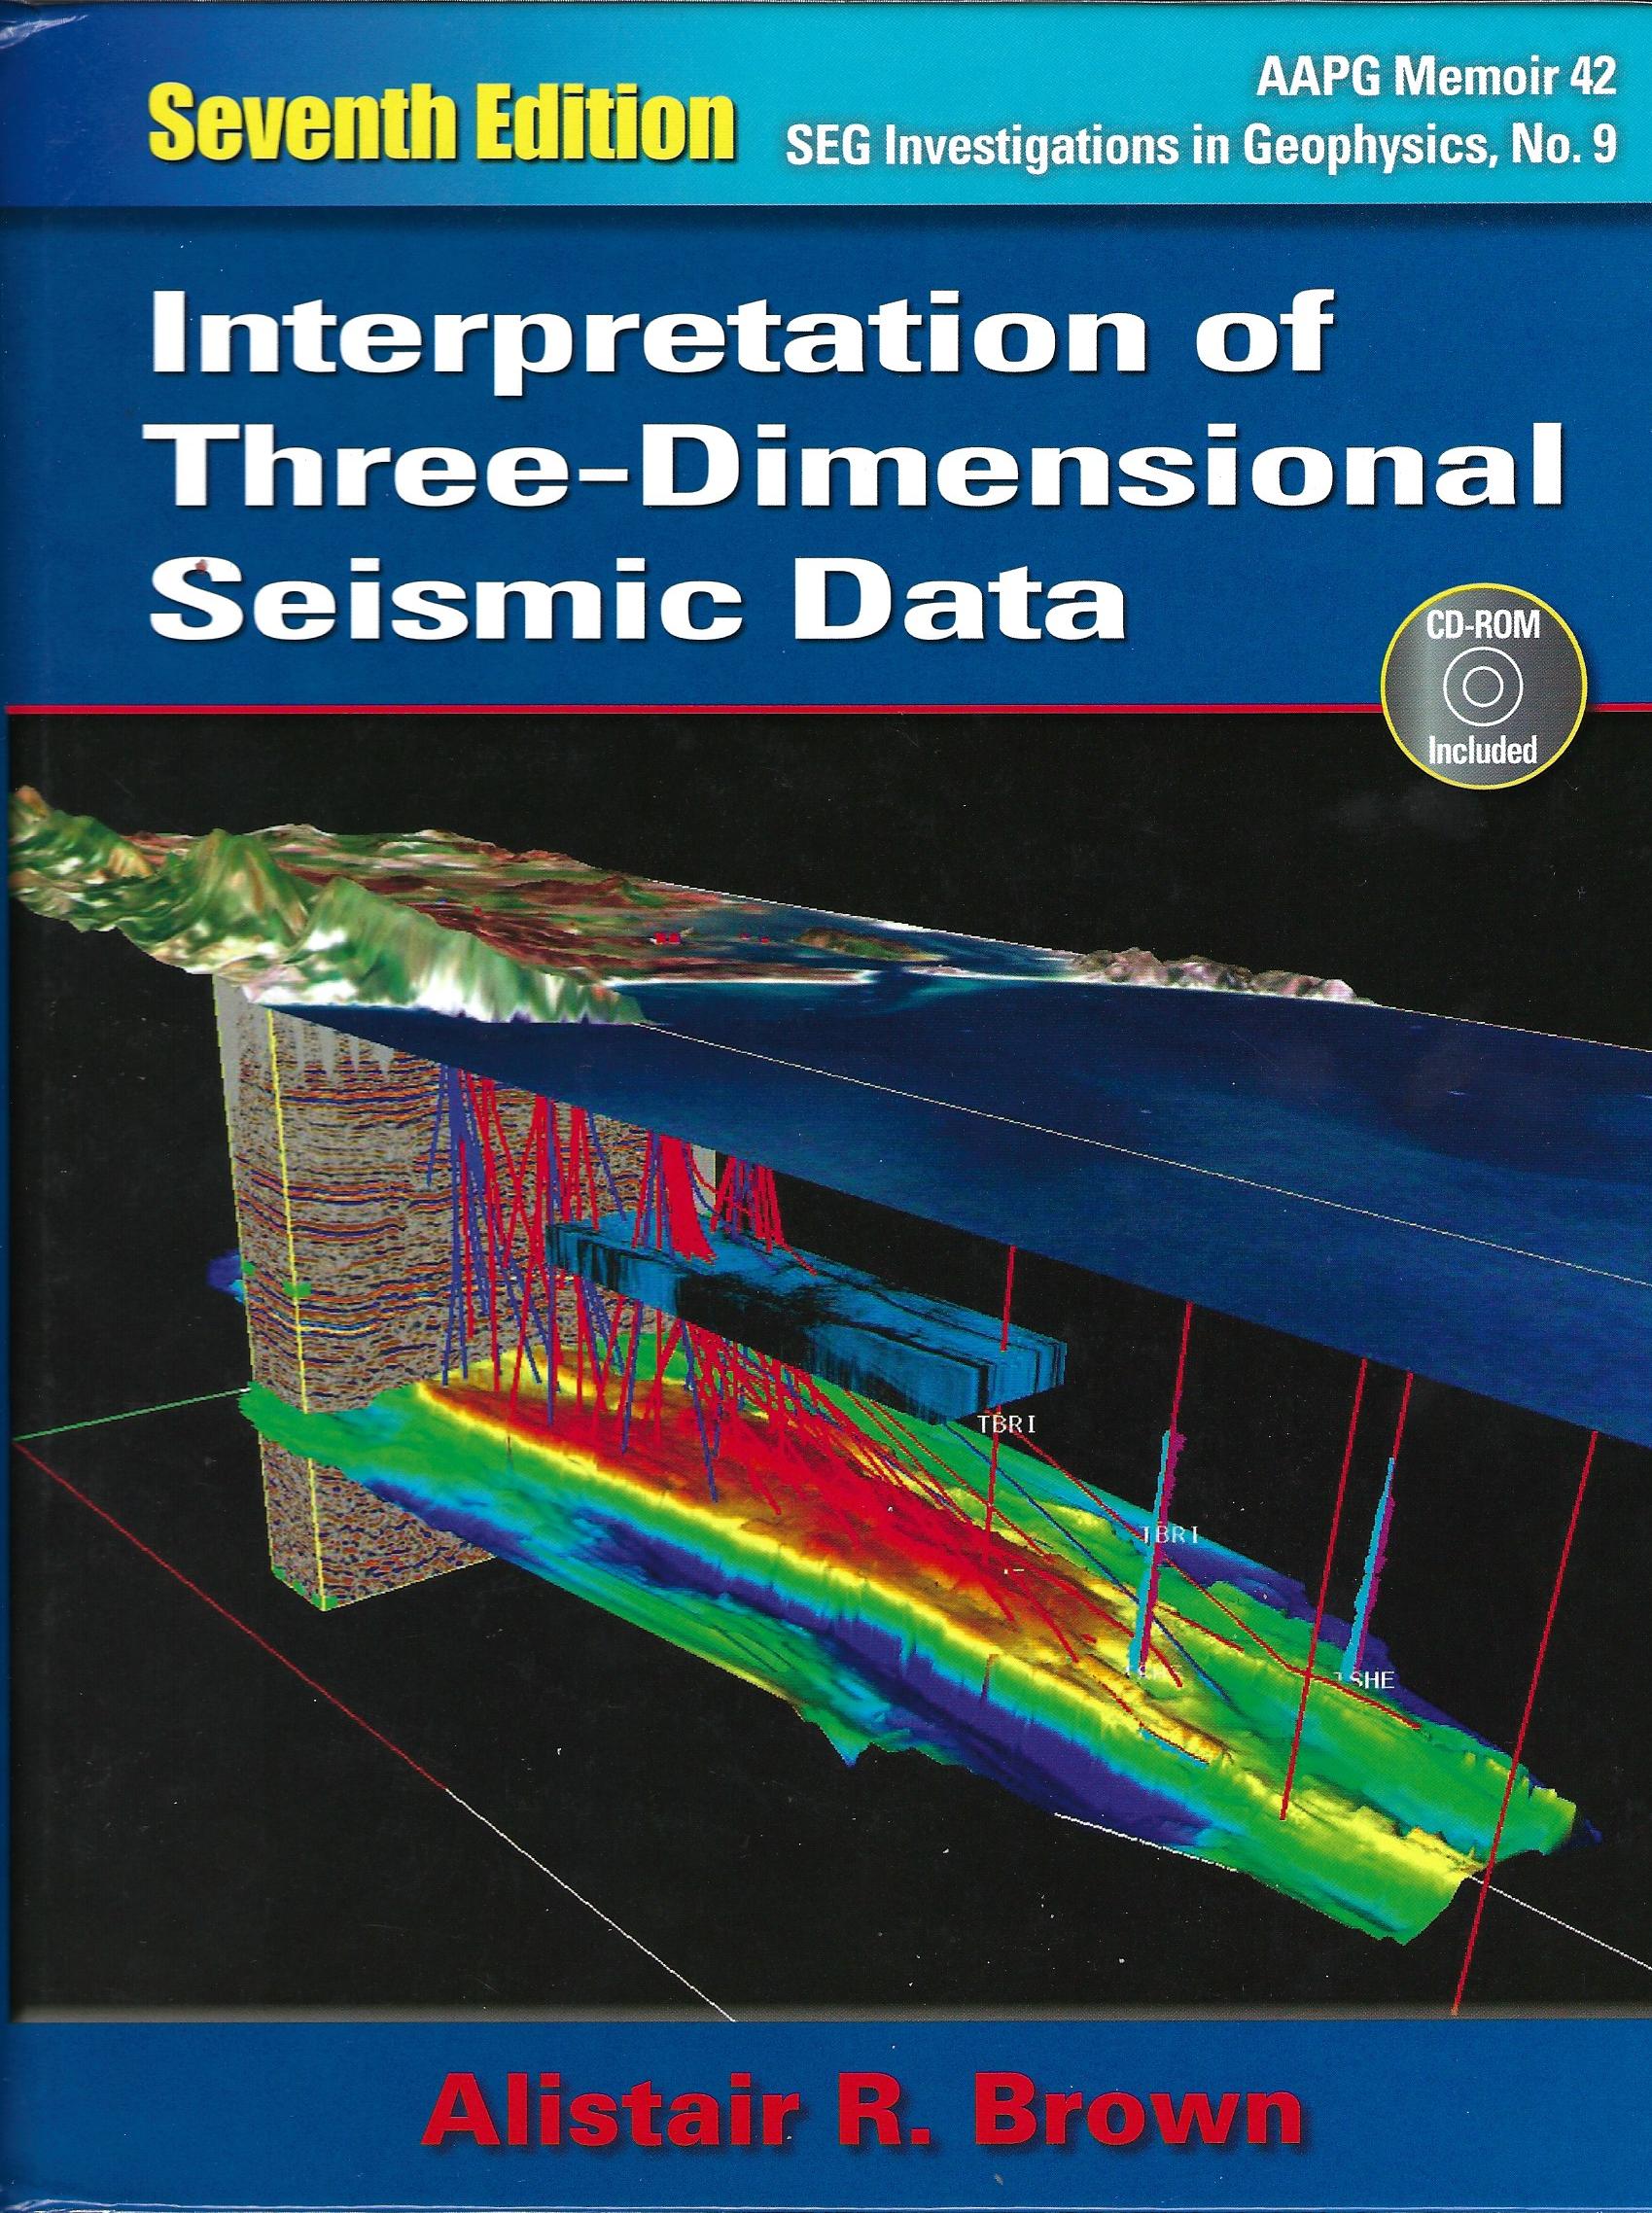 Image for Interpretation of Three-Dimensional Seismic Data, AAPG SEG Investigations in Geophysics No. 9. 7th Edition